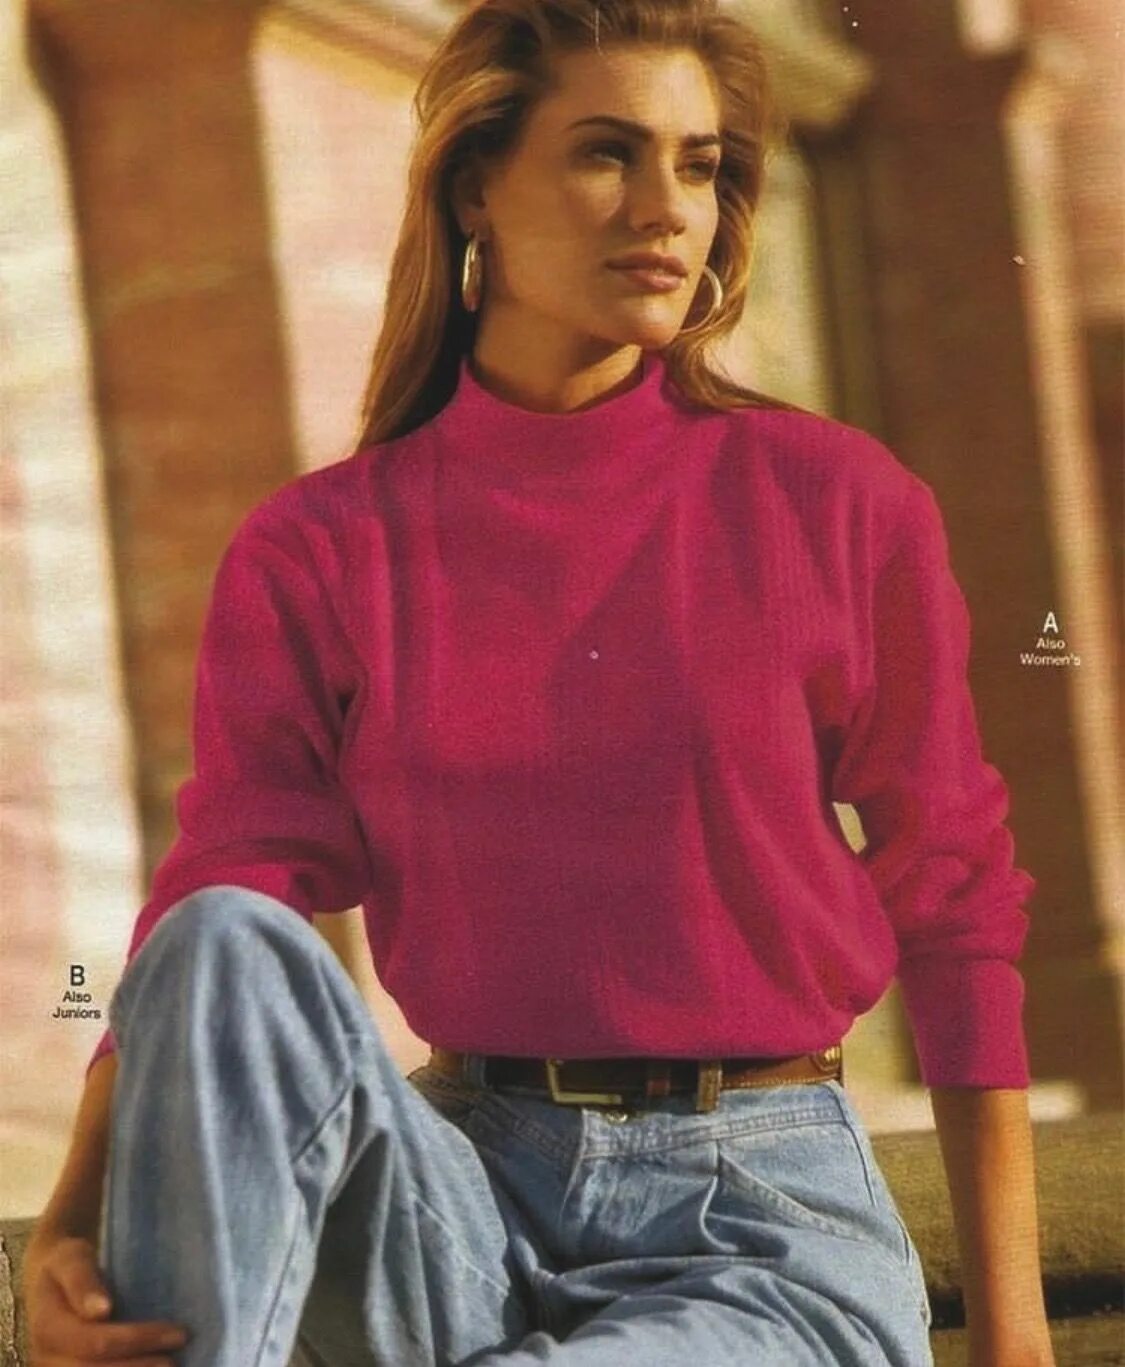 1990 е мода. 90е мода США. Свитер в стиле 80-х. Одежда 80-х годов женская. Блузки 80-х годов.